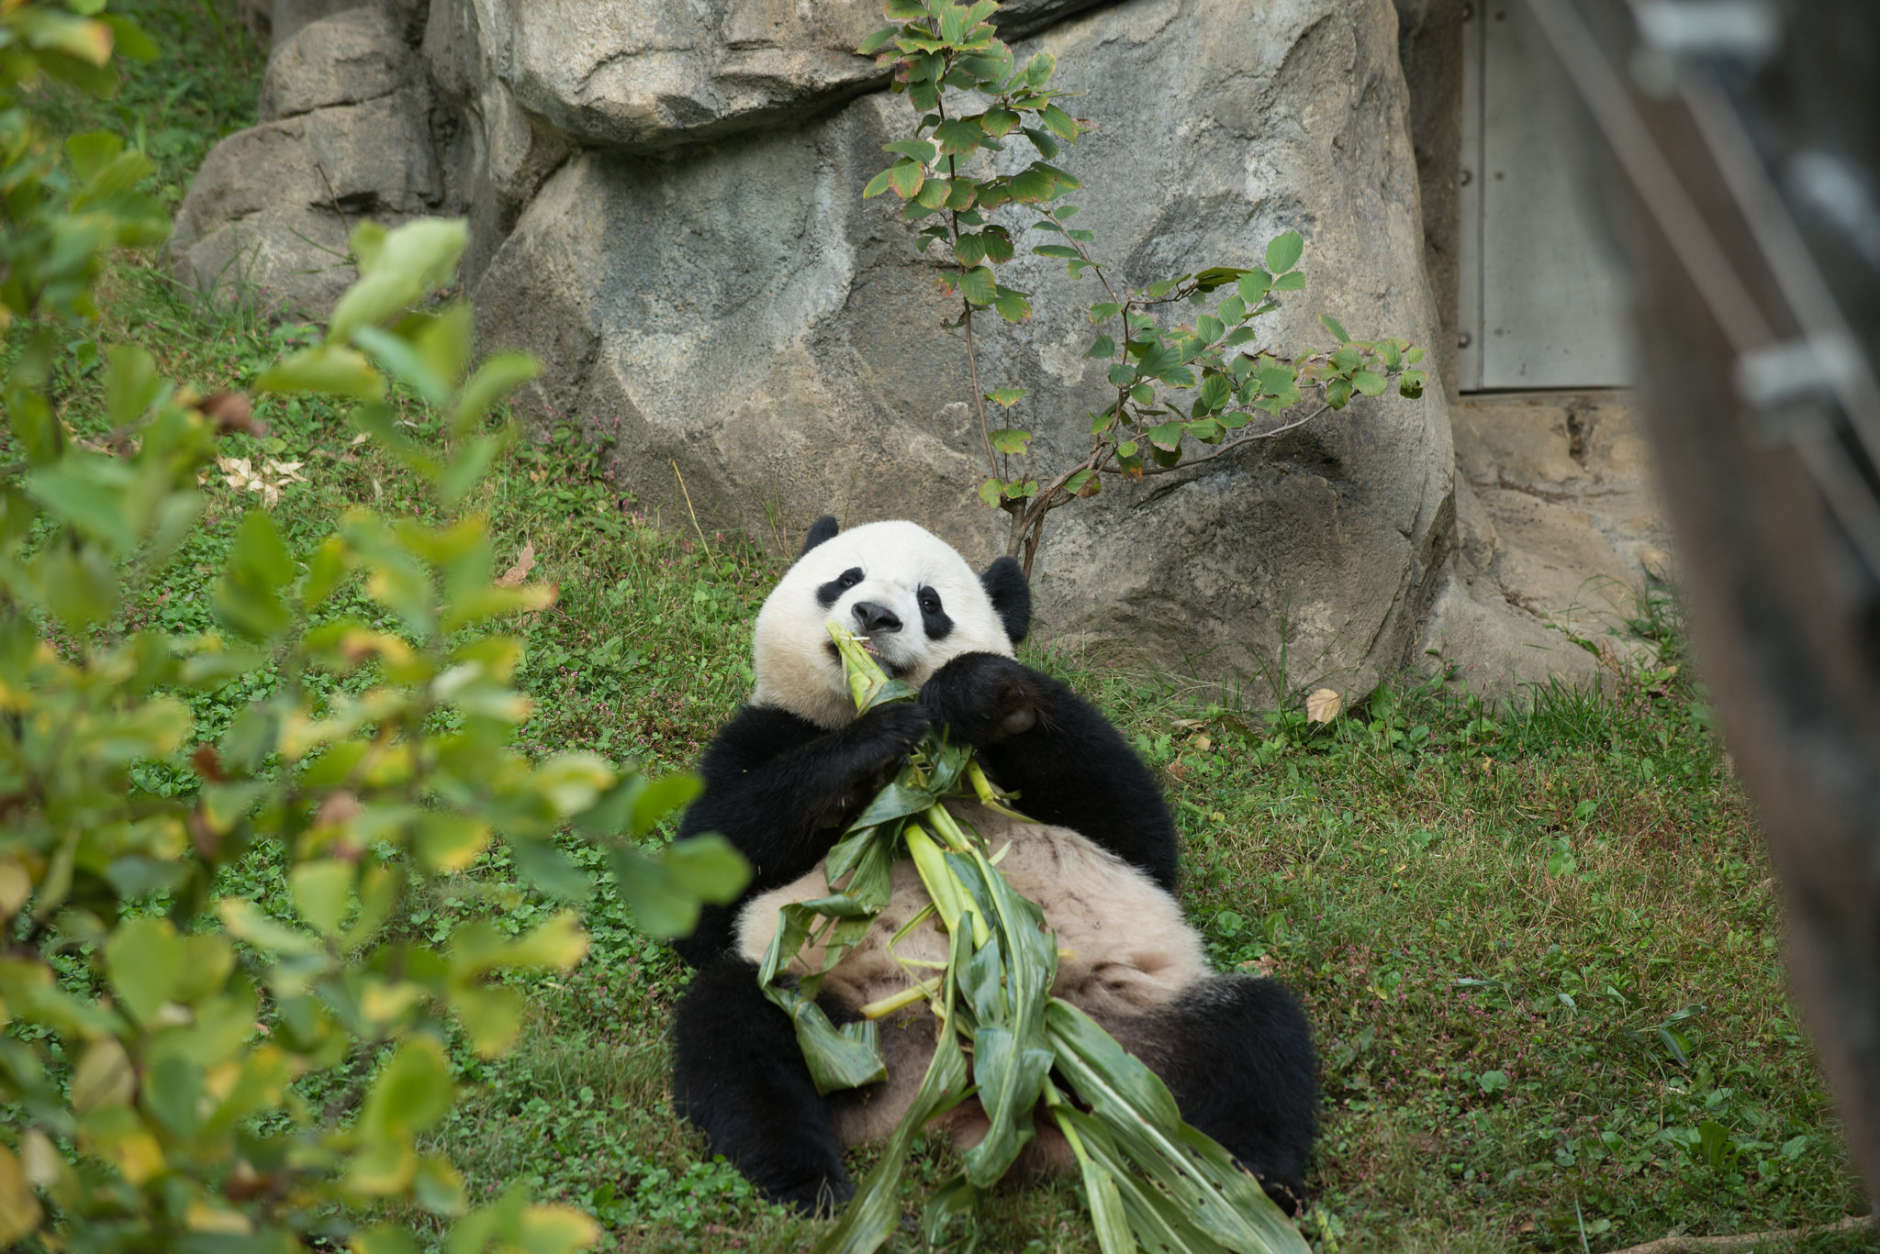 Bao Bao will be shipped on her own Fed Ex cargo plane February 21. (Courtesy Smithsonian National Zoo)